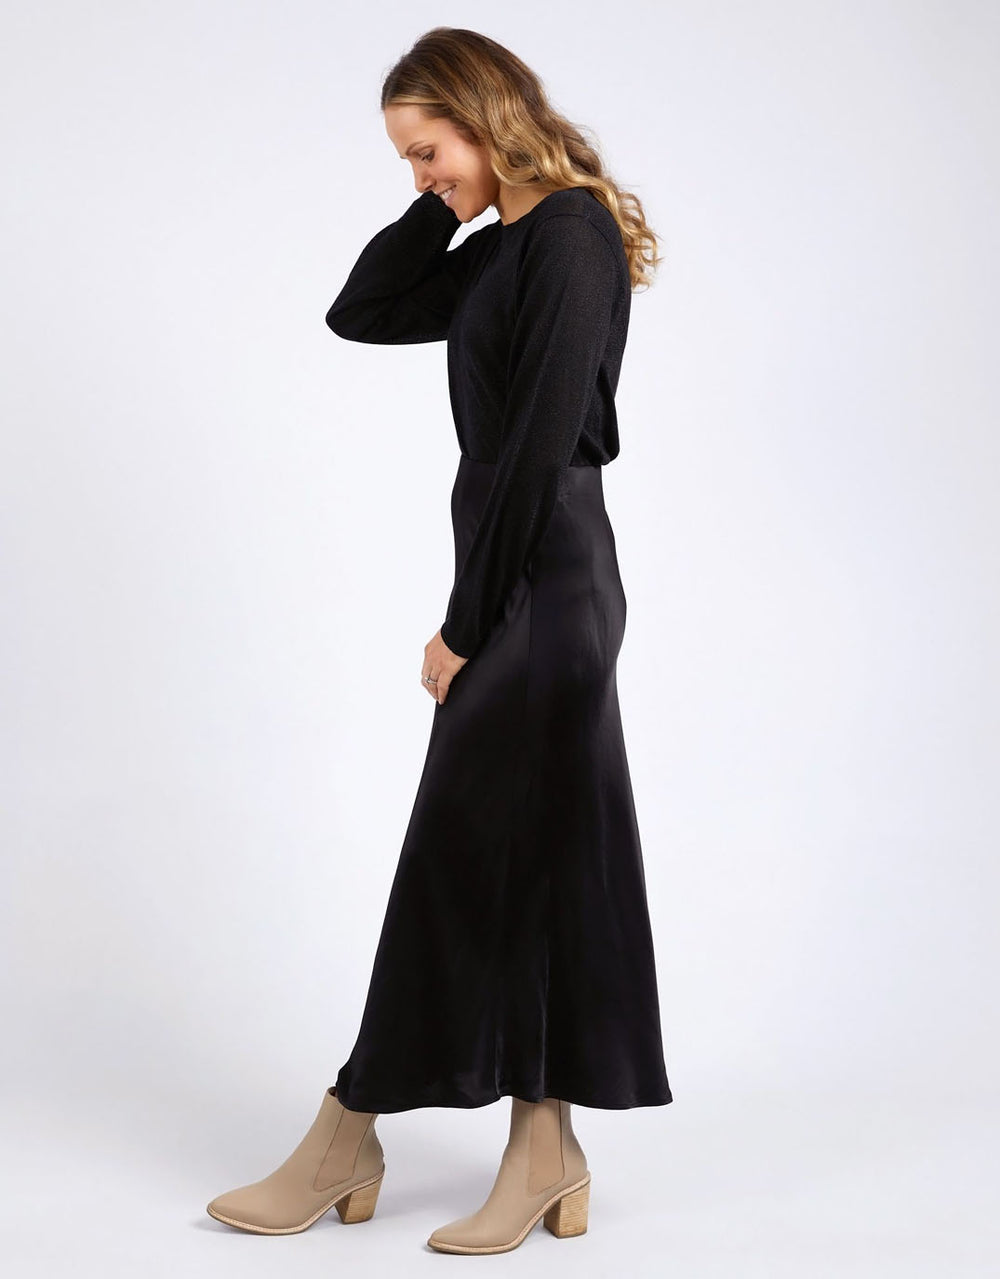 foxwood-huntliegh-skirt-black-womens-clothing